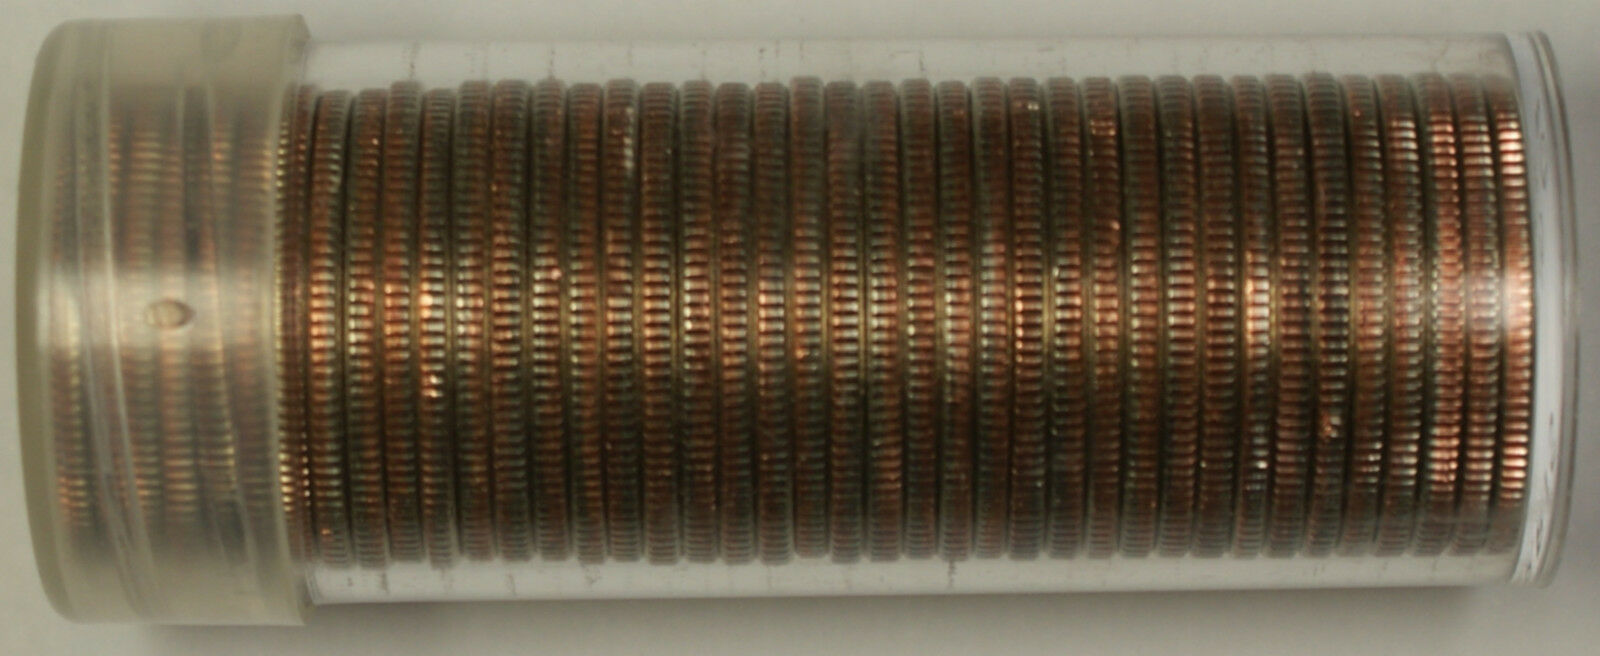 2002 D Ohio State Quarter BU Roll- 40 Coins